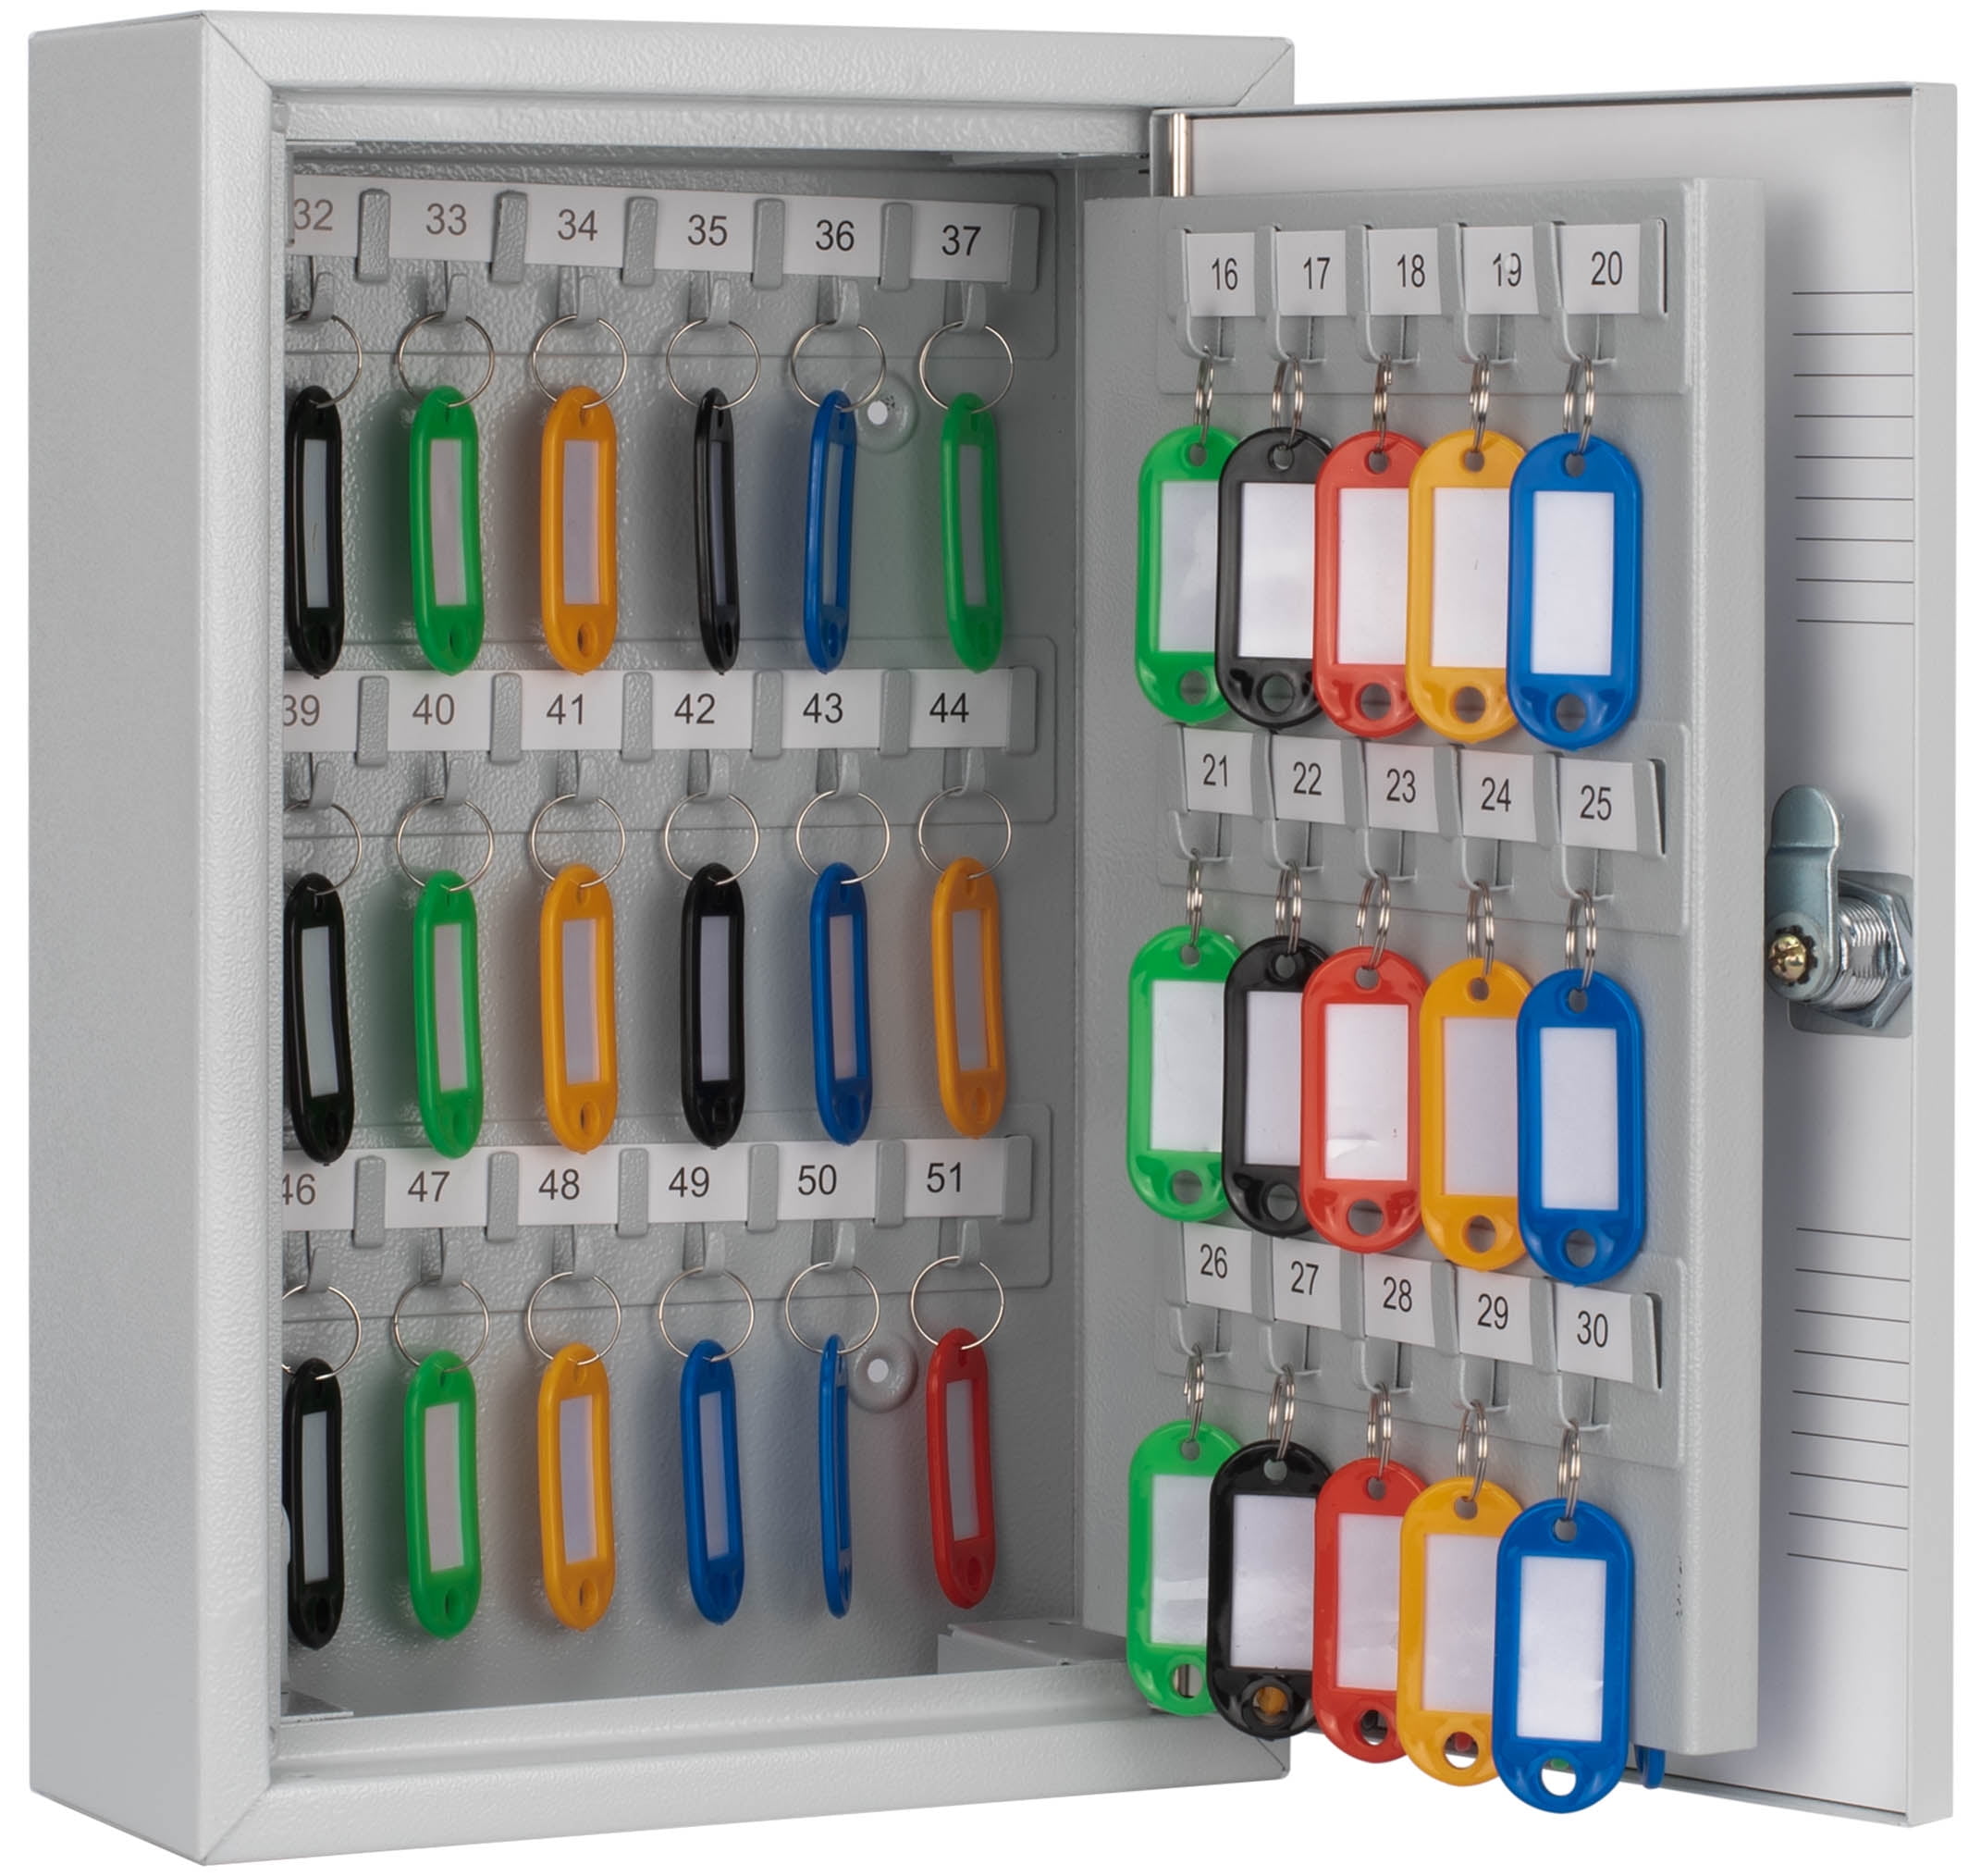 245 Hook Key Safe Digital Electronic Cabinet Security Lock Storage Box Organizer